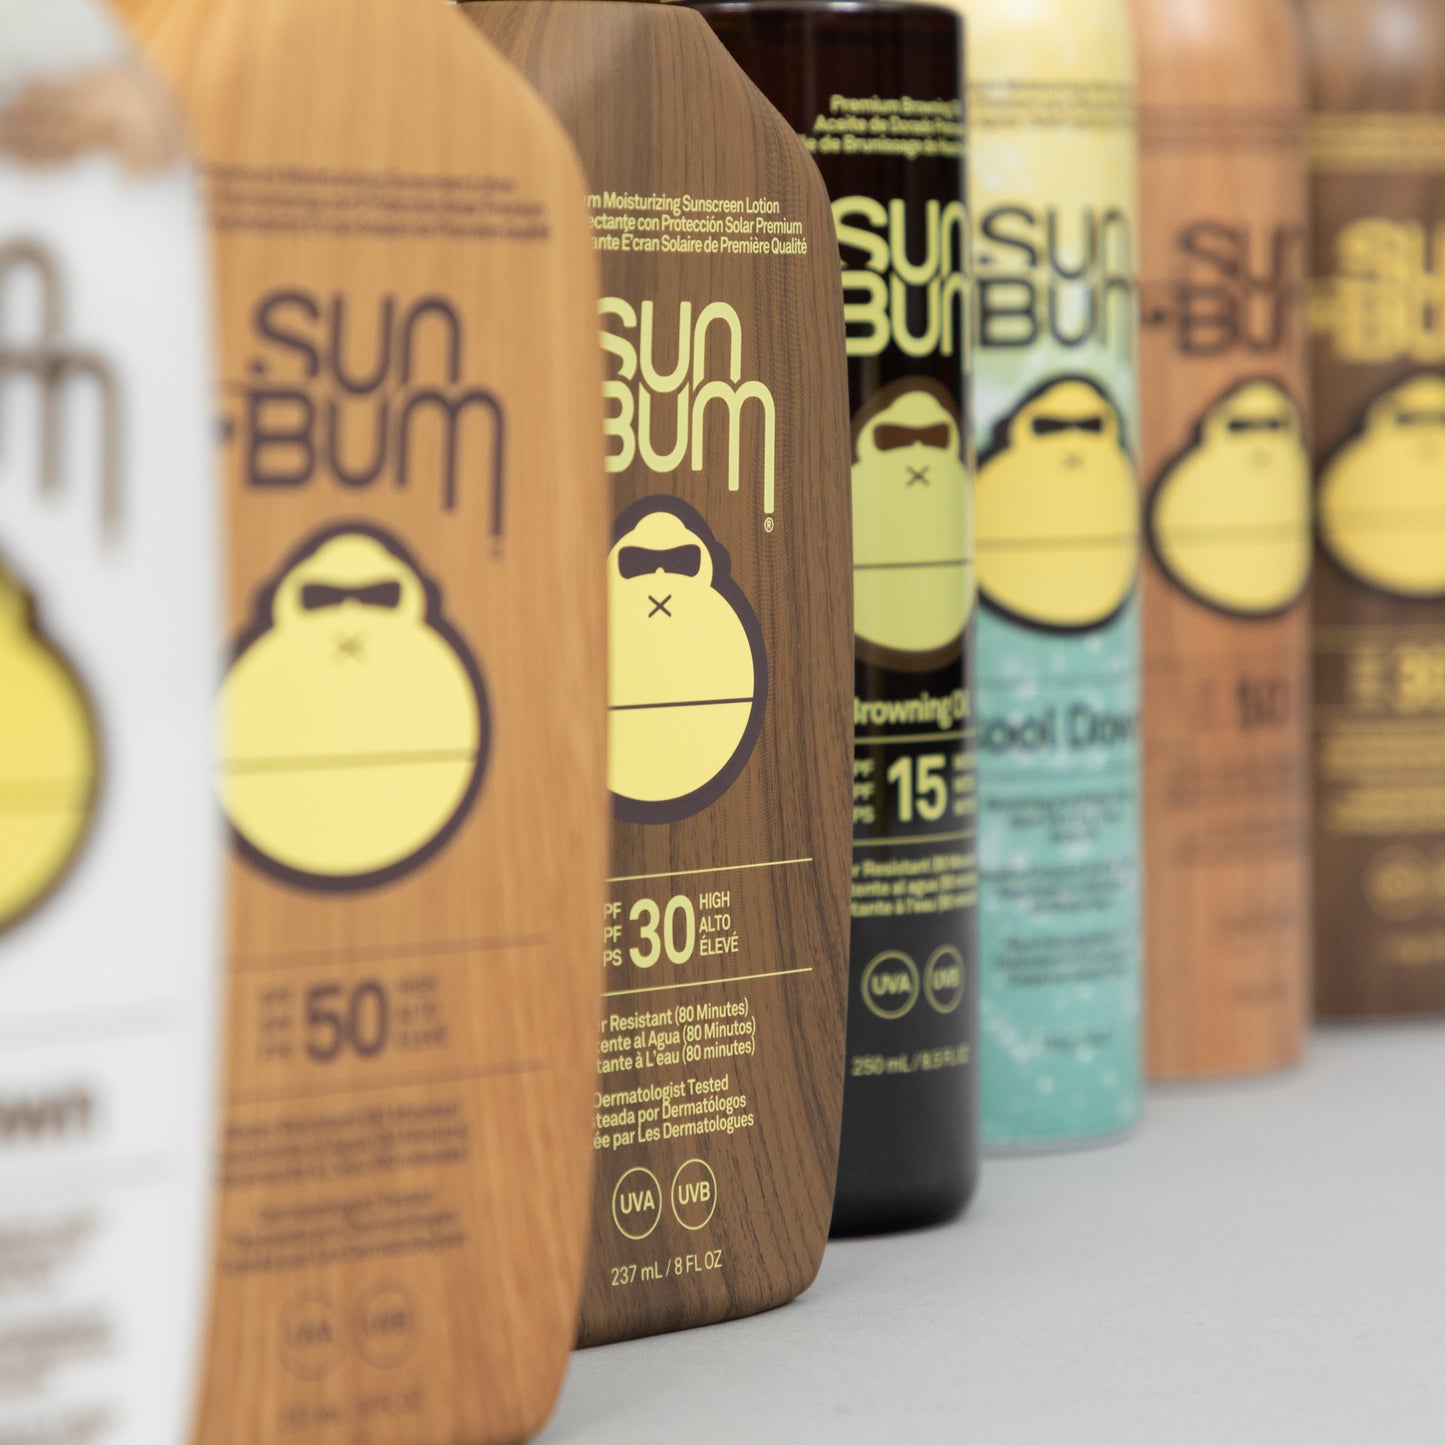 SUN BUM Original SPF 30 Sunscreen Spray (170g)